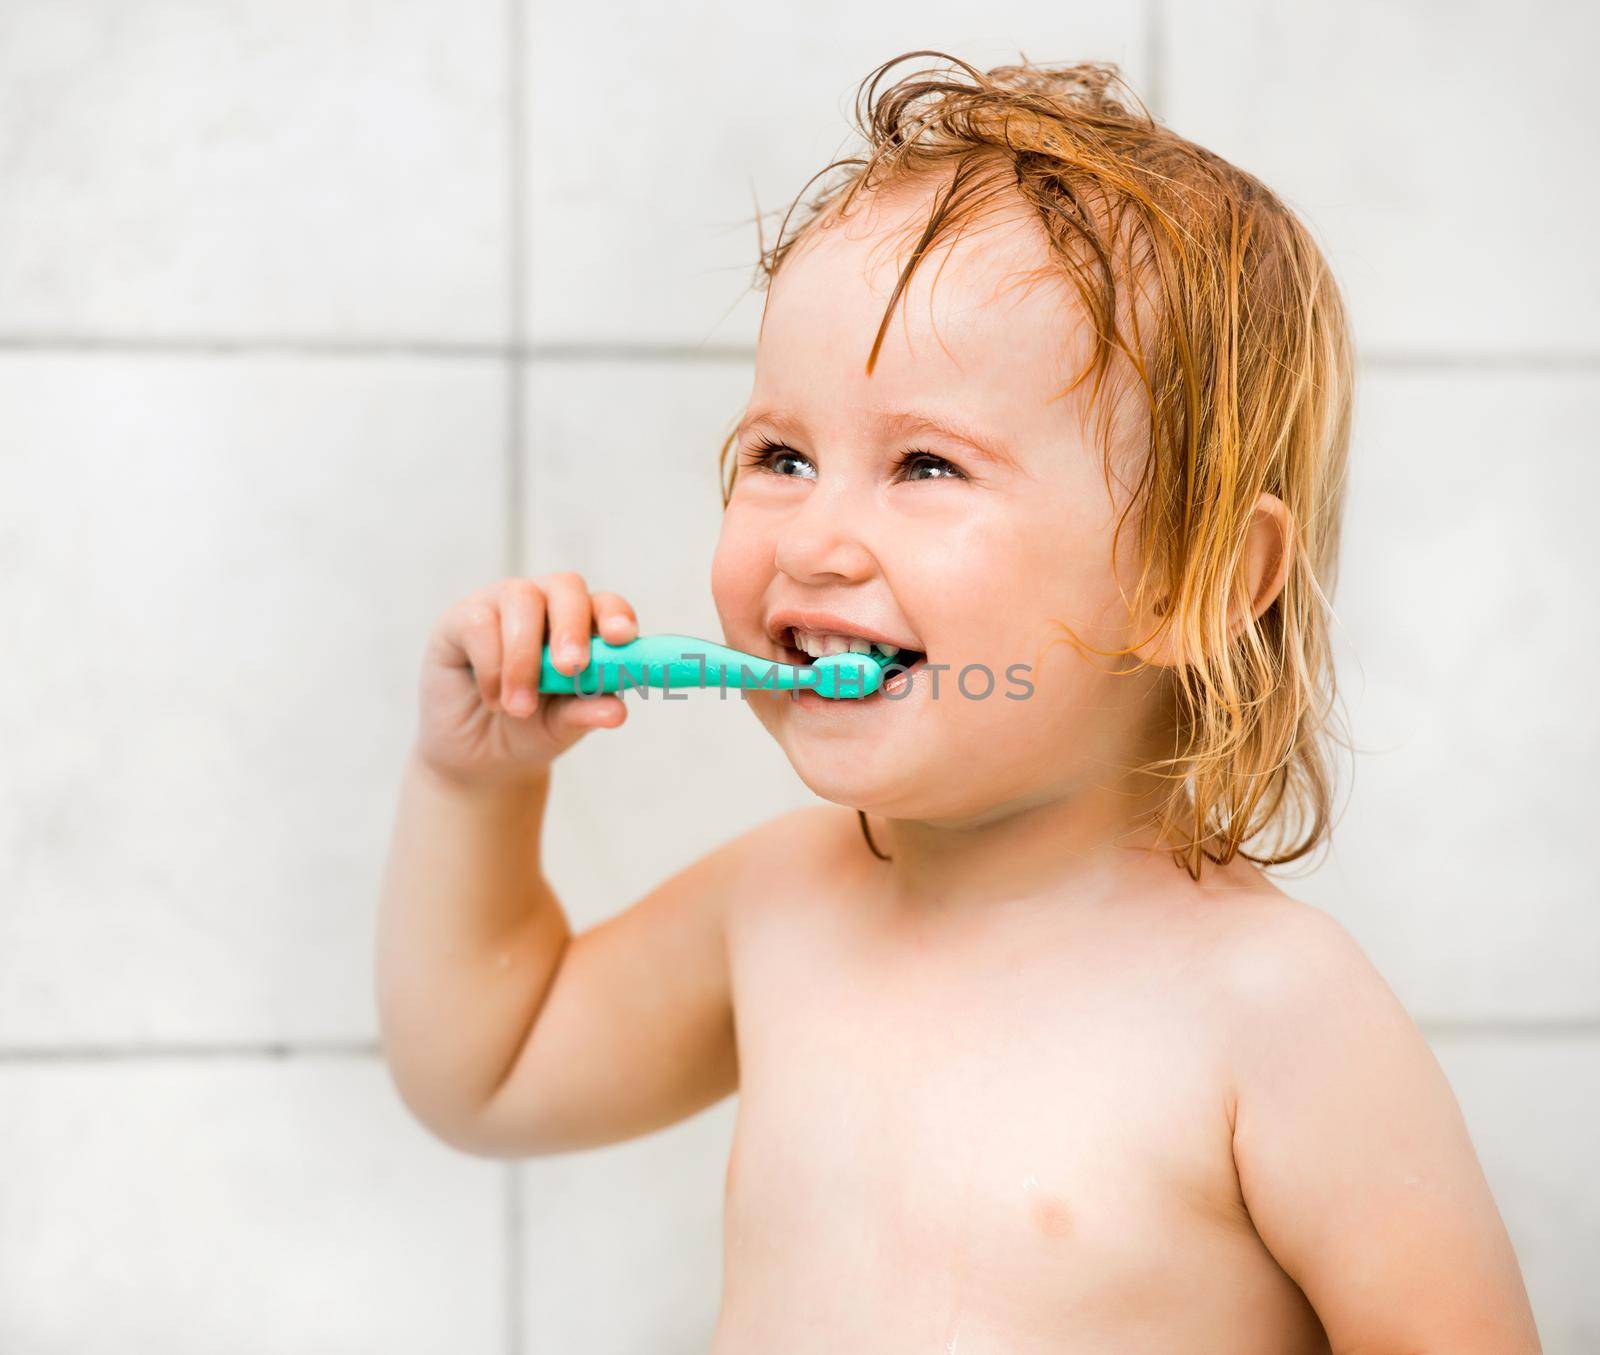 Dental hygiene. Cute baby brushing teeth in bathroom